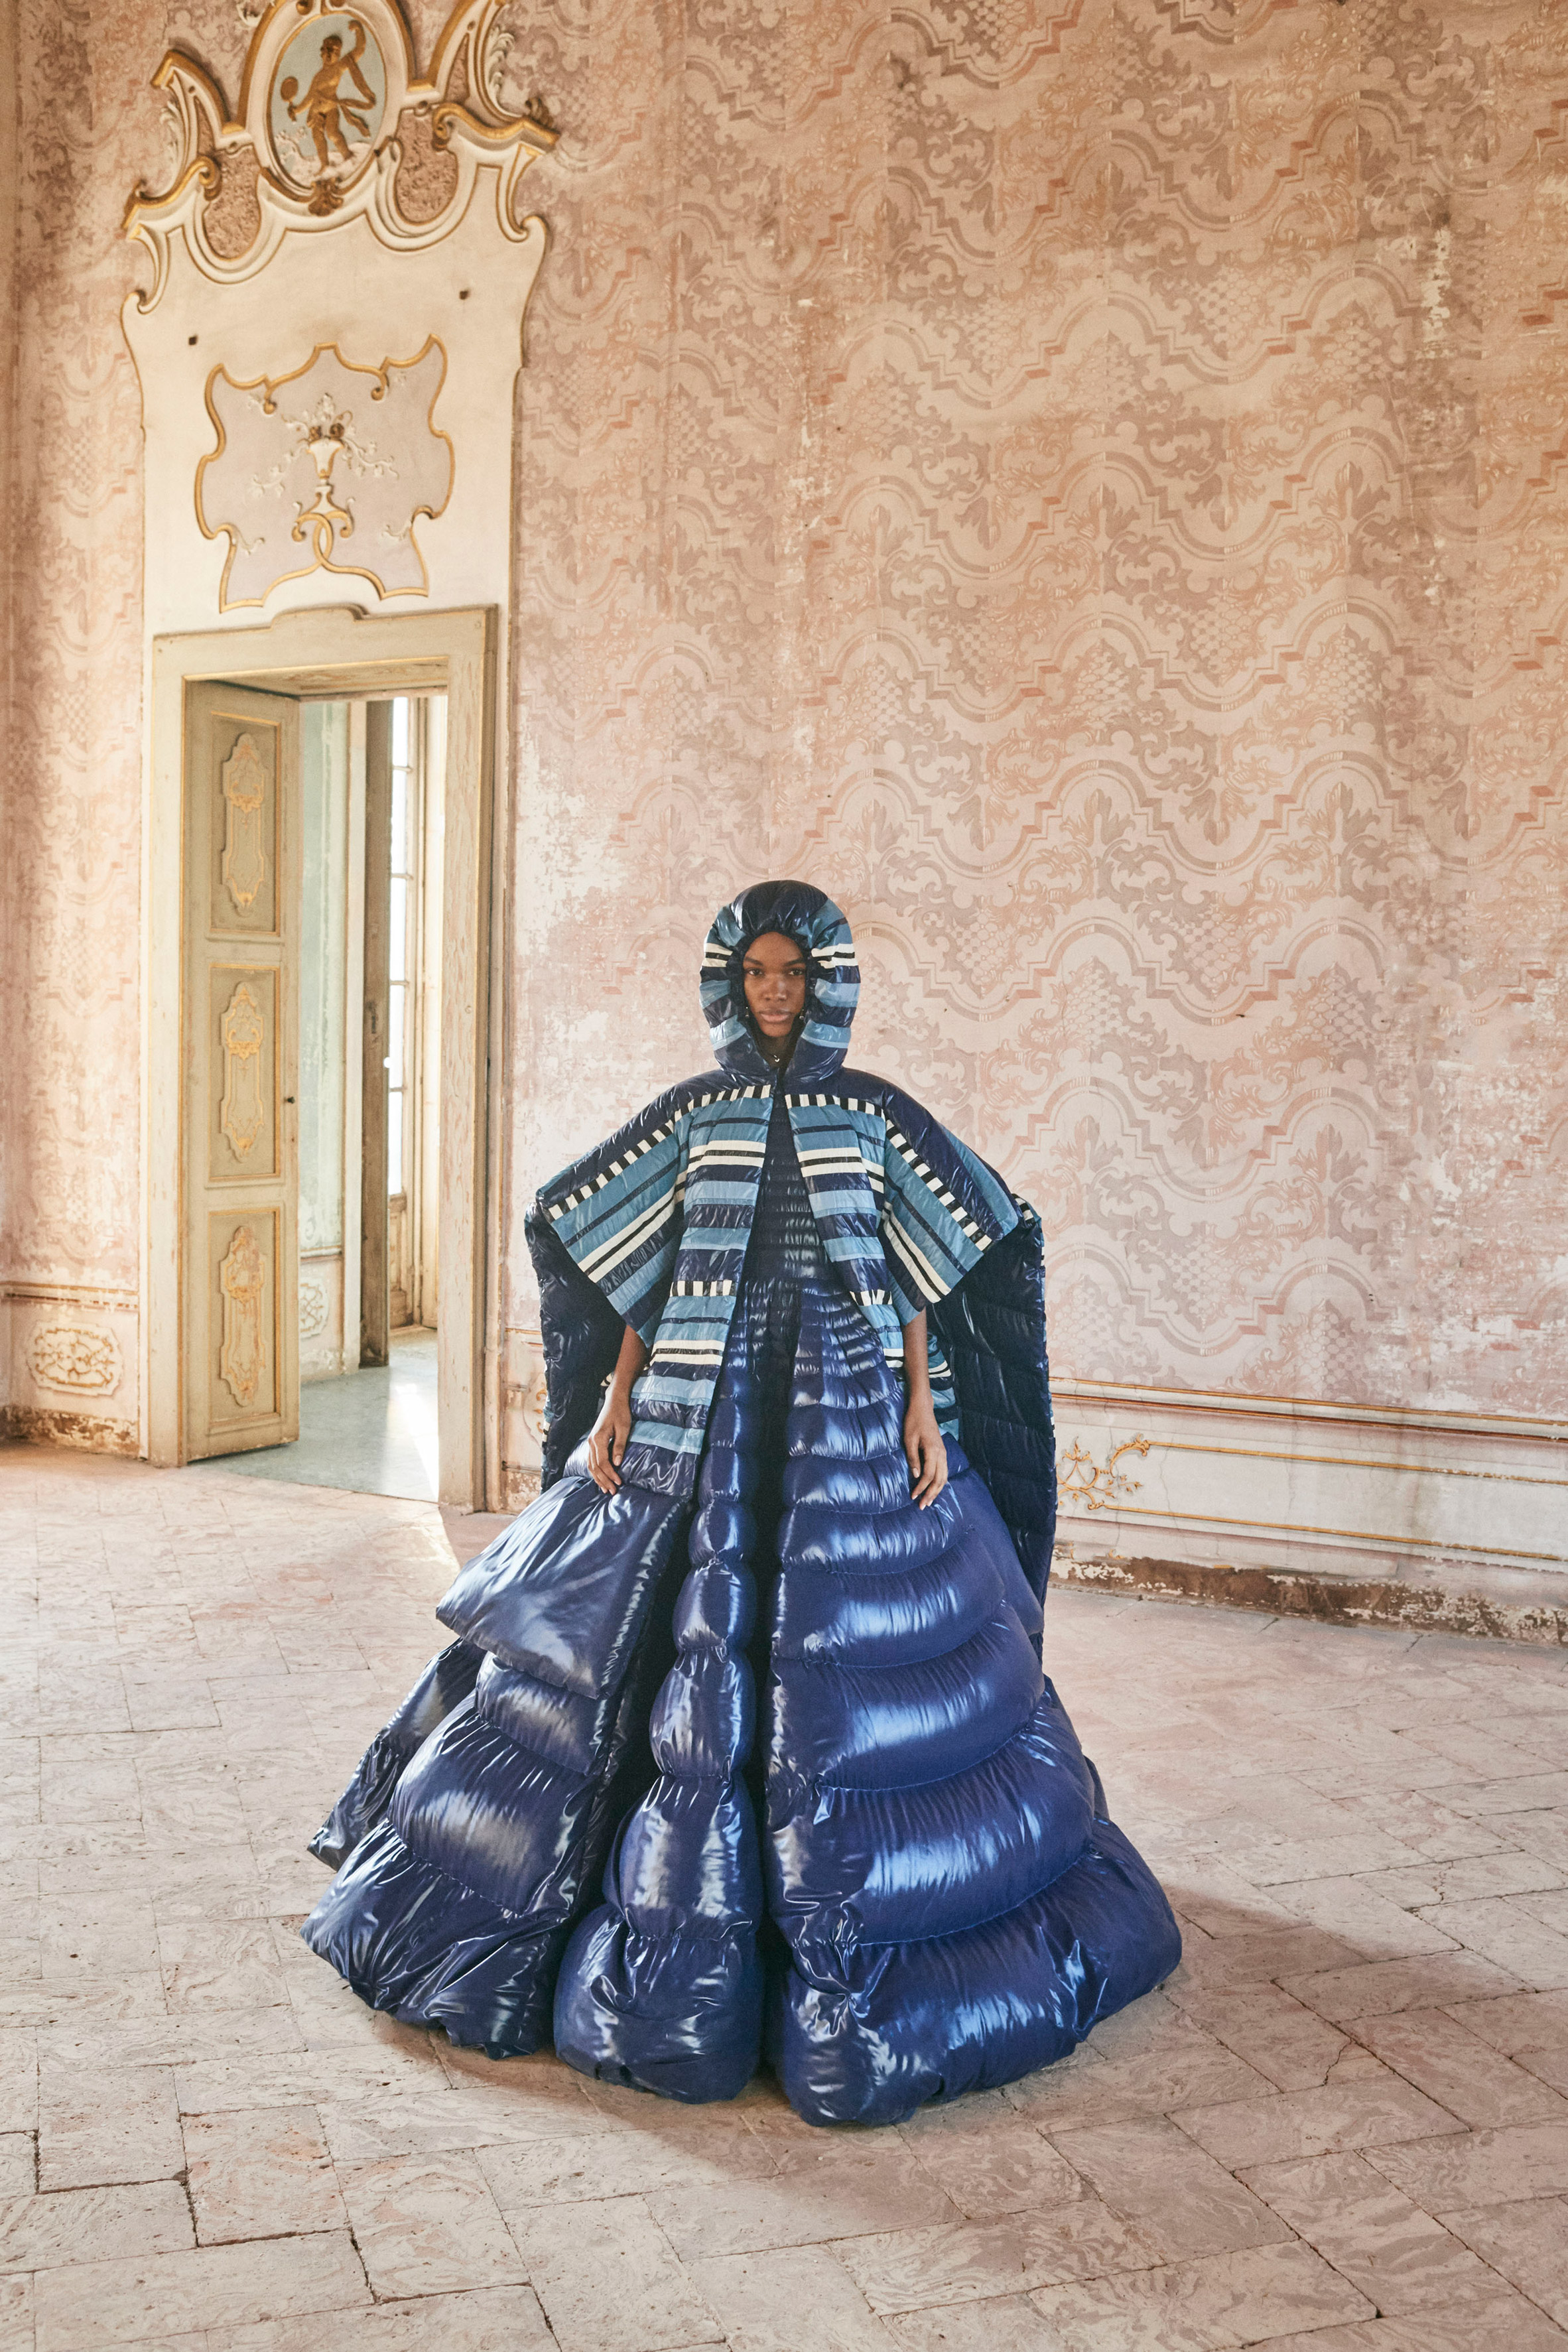 Moncler Genius collection by Valentino creative director Pierpaolo Piccioli at Milan Fashion Week